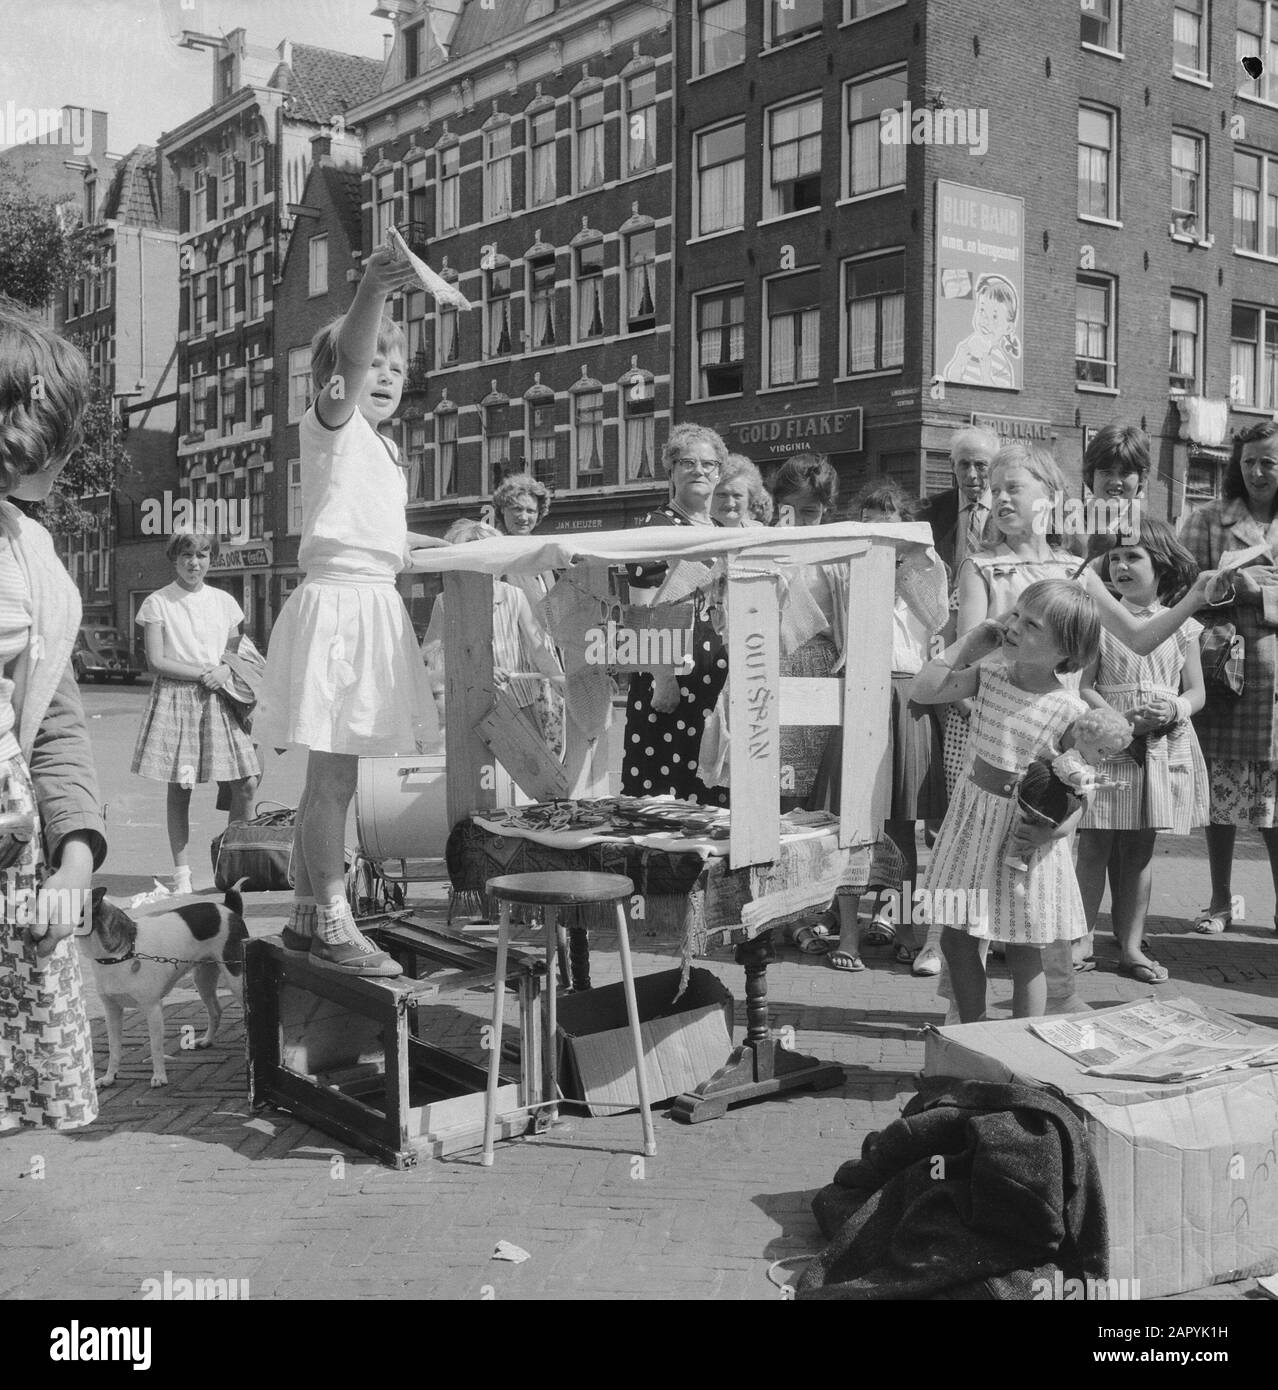 Children's market in the Jordaan, stand worker with washcloths Date: August  1, 1960 Location: Amsterdam, Jordaan (Amsterdam), Lindengracht,  Noord-Holland Keywords: children, markets, marketplace holiday Stock Photo  - Alamy